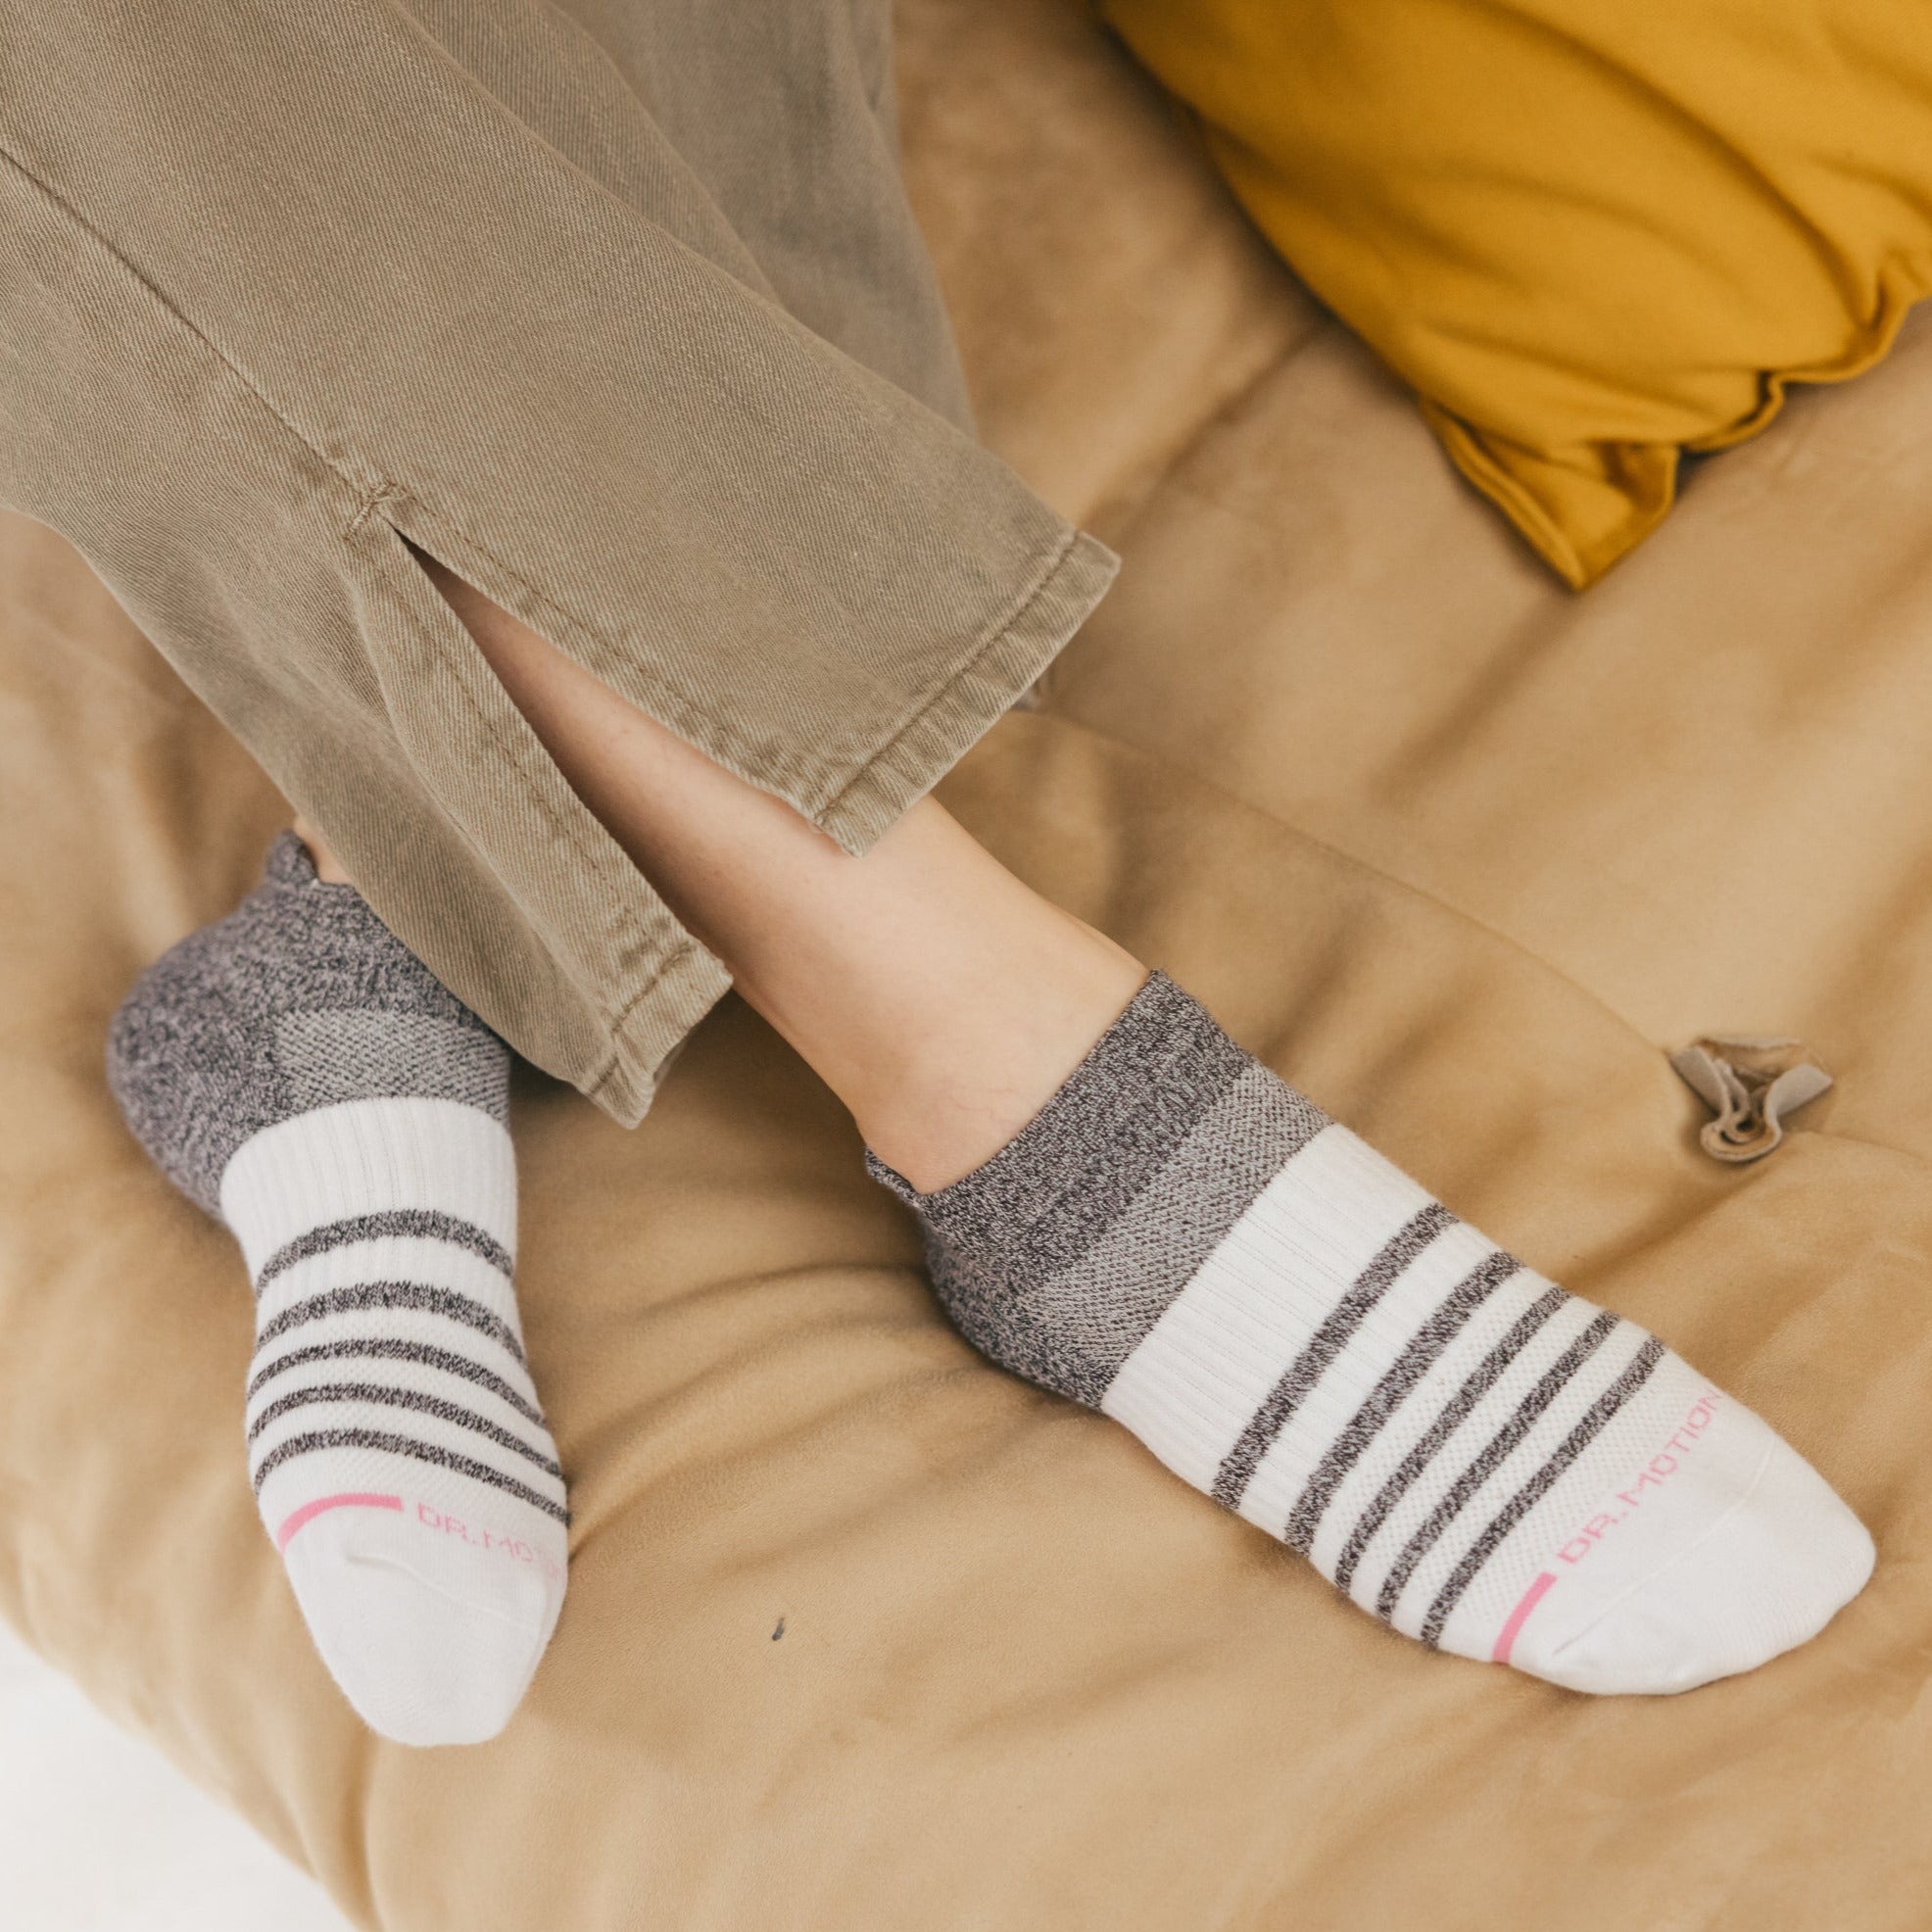 Contrast Stripe | Ankle Compression Socks For Women